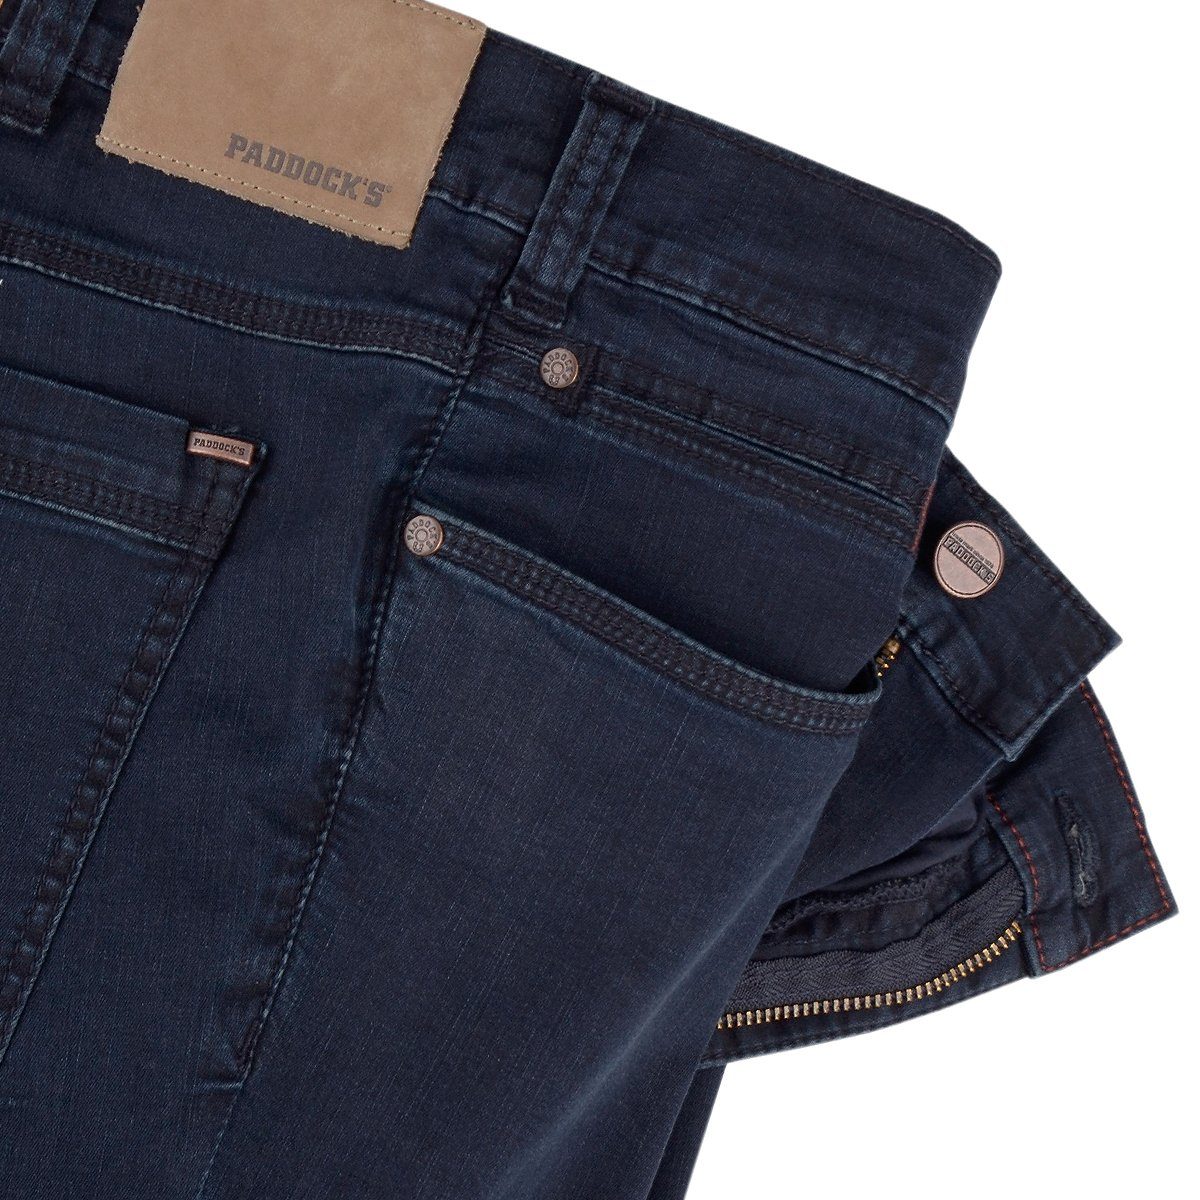 Übergröße Paddock's Ranger Paddock´s Stretchjeans dunkelblau Stretch-Jeans